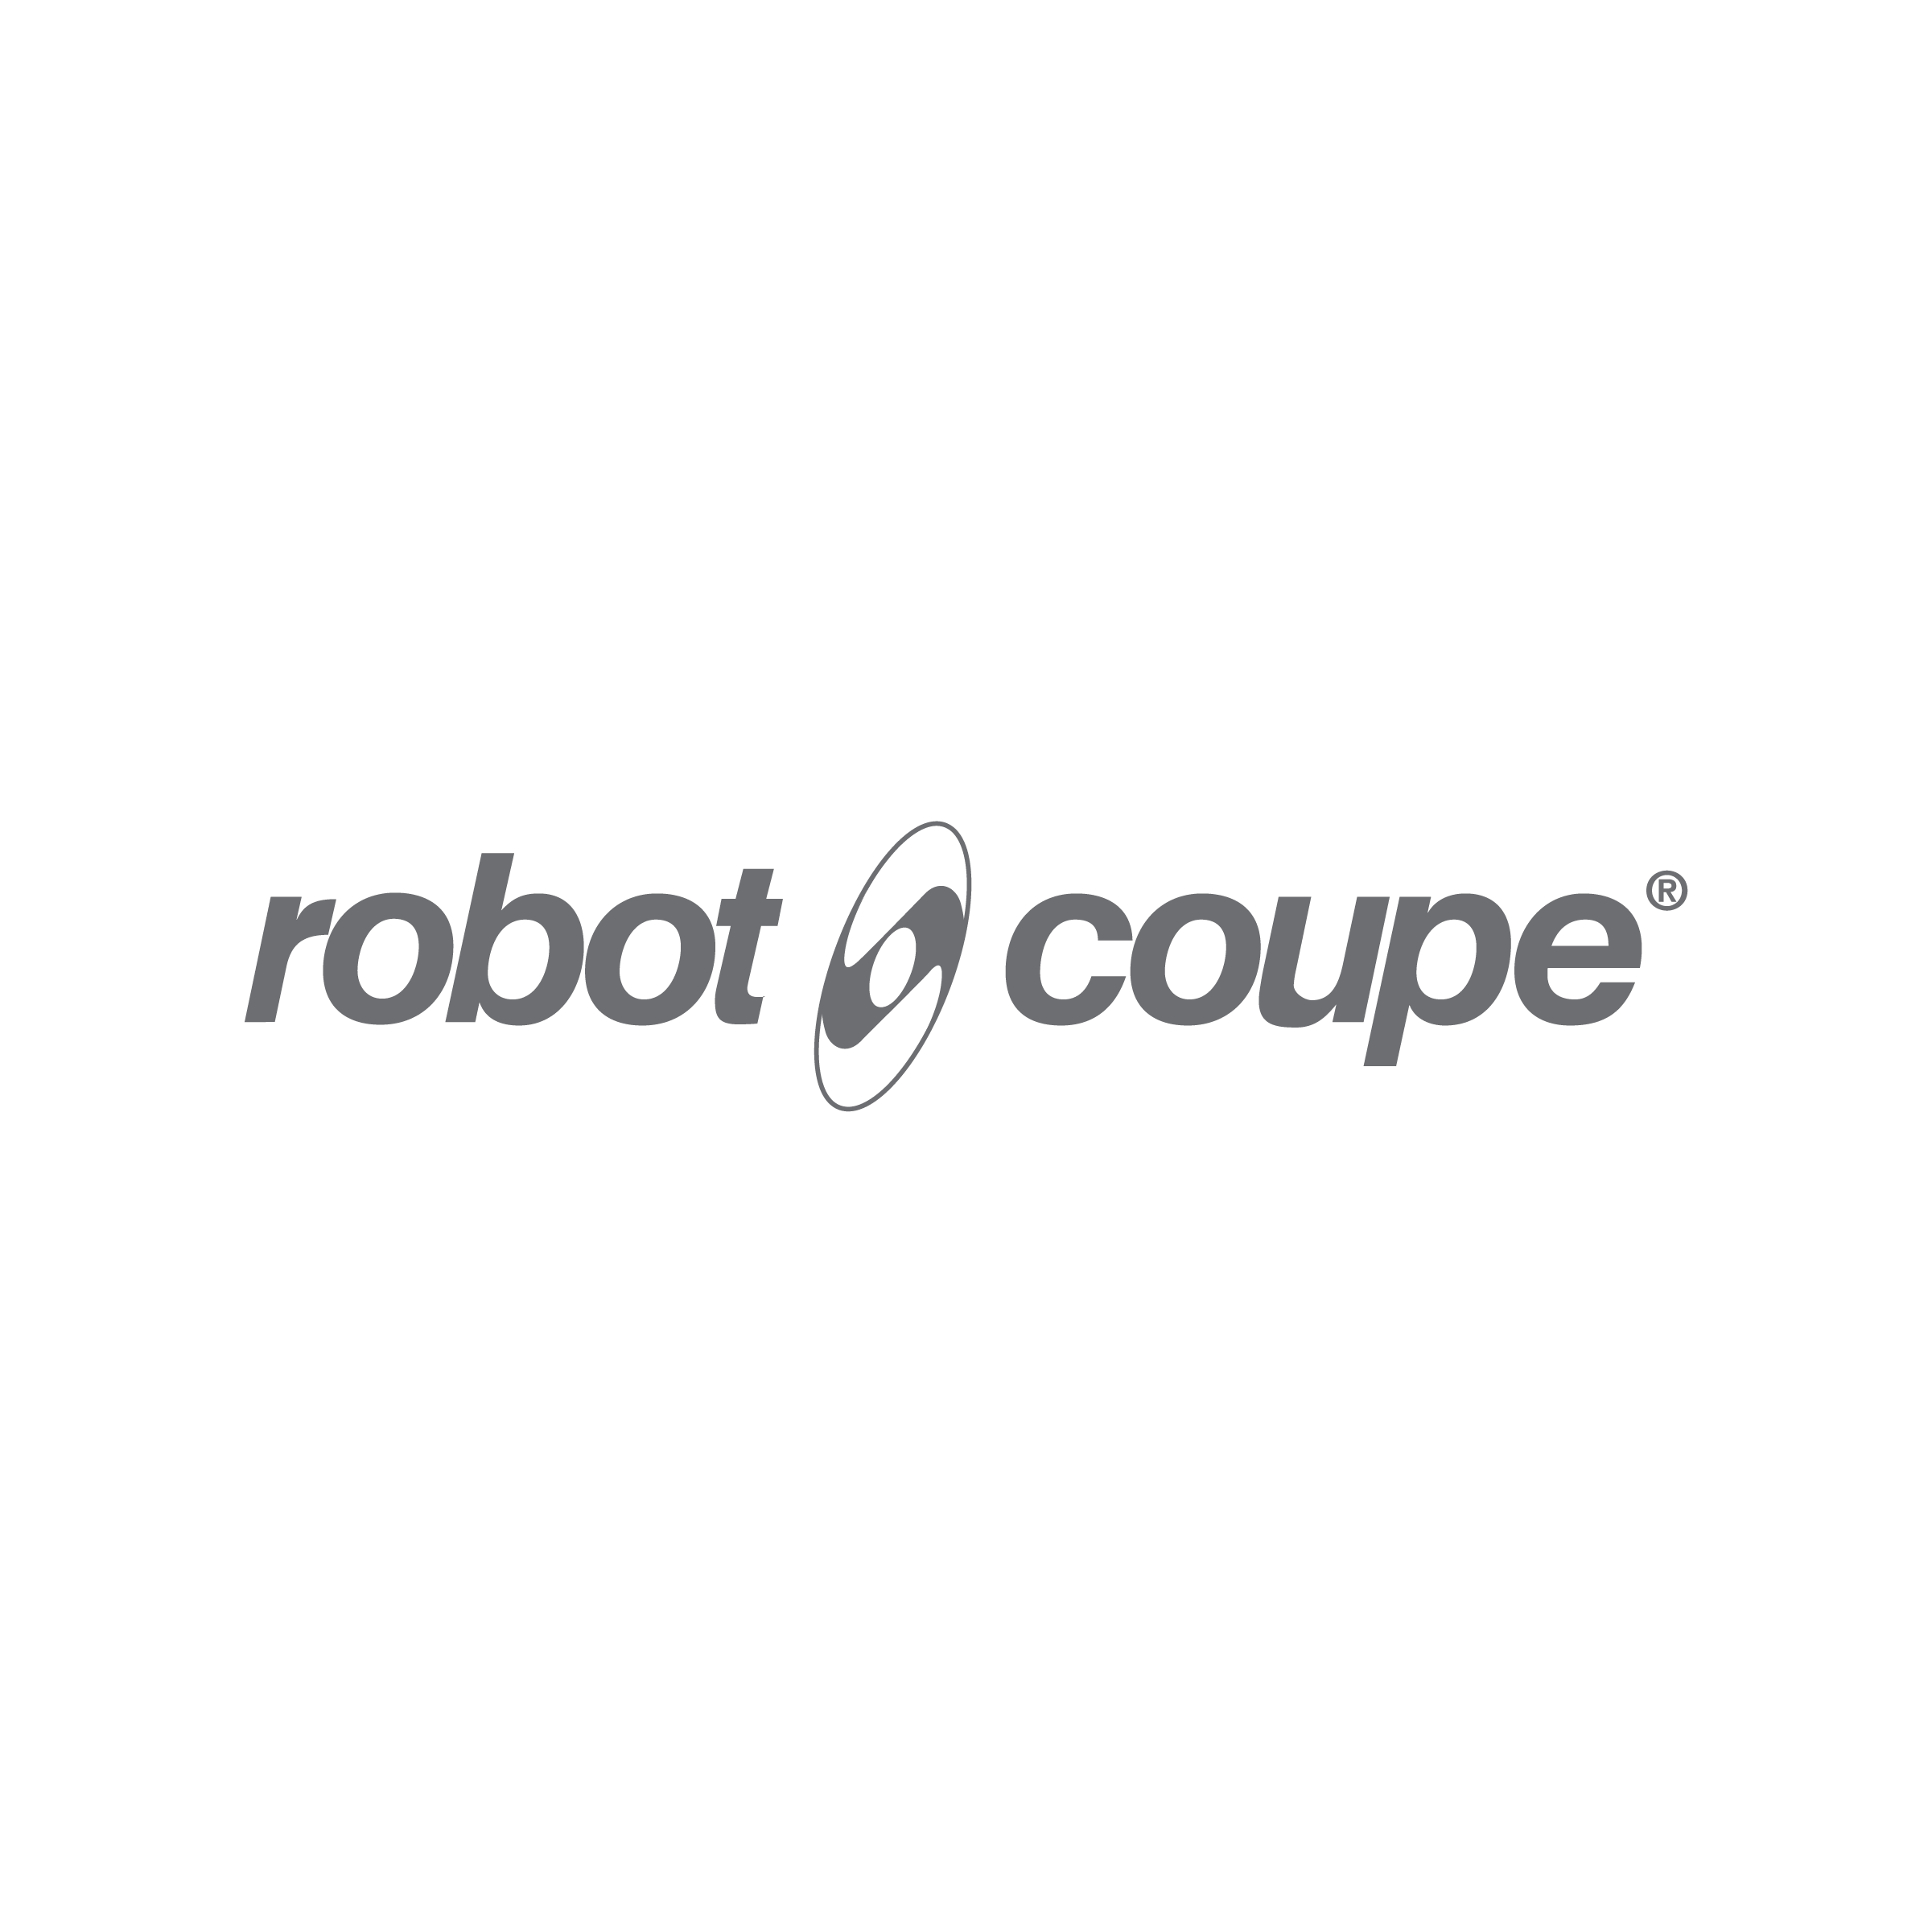 Nefem-Silver-Logos-_Robot-COupe.png